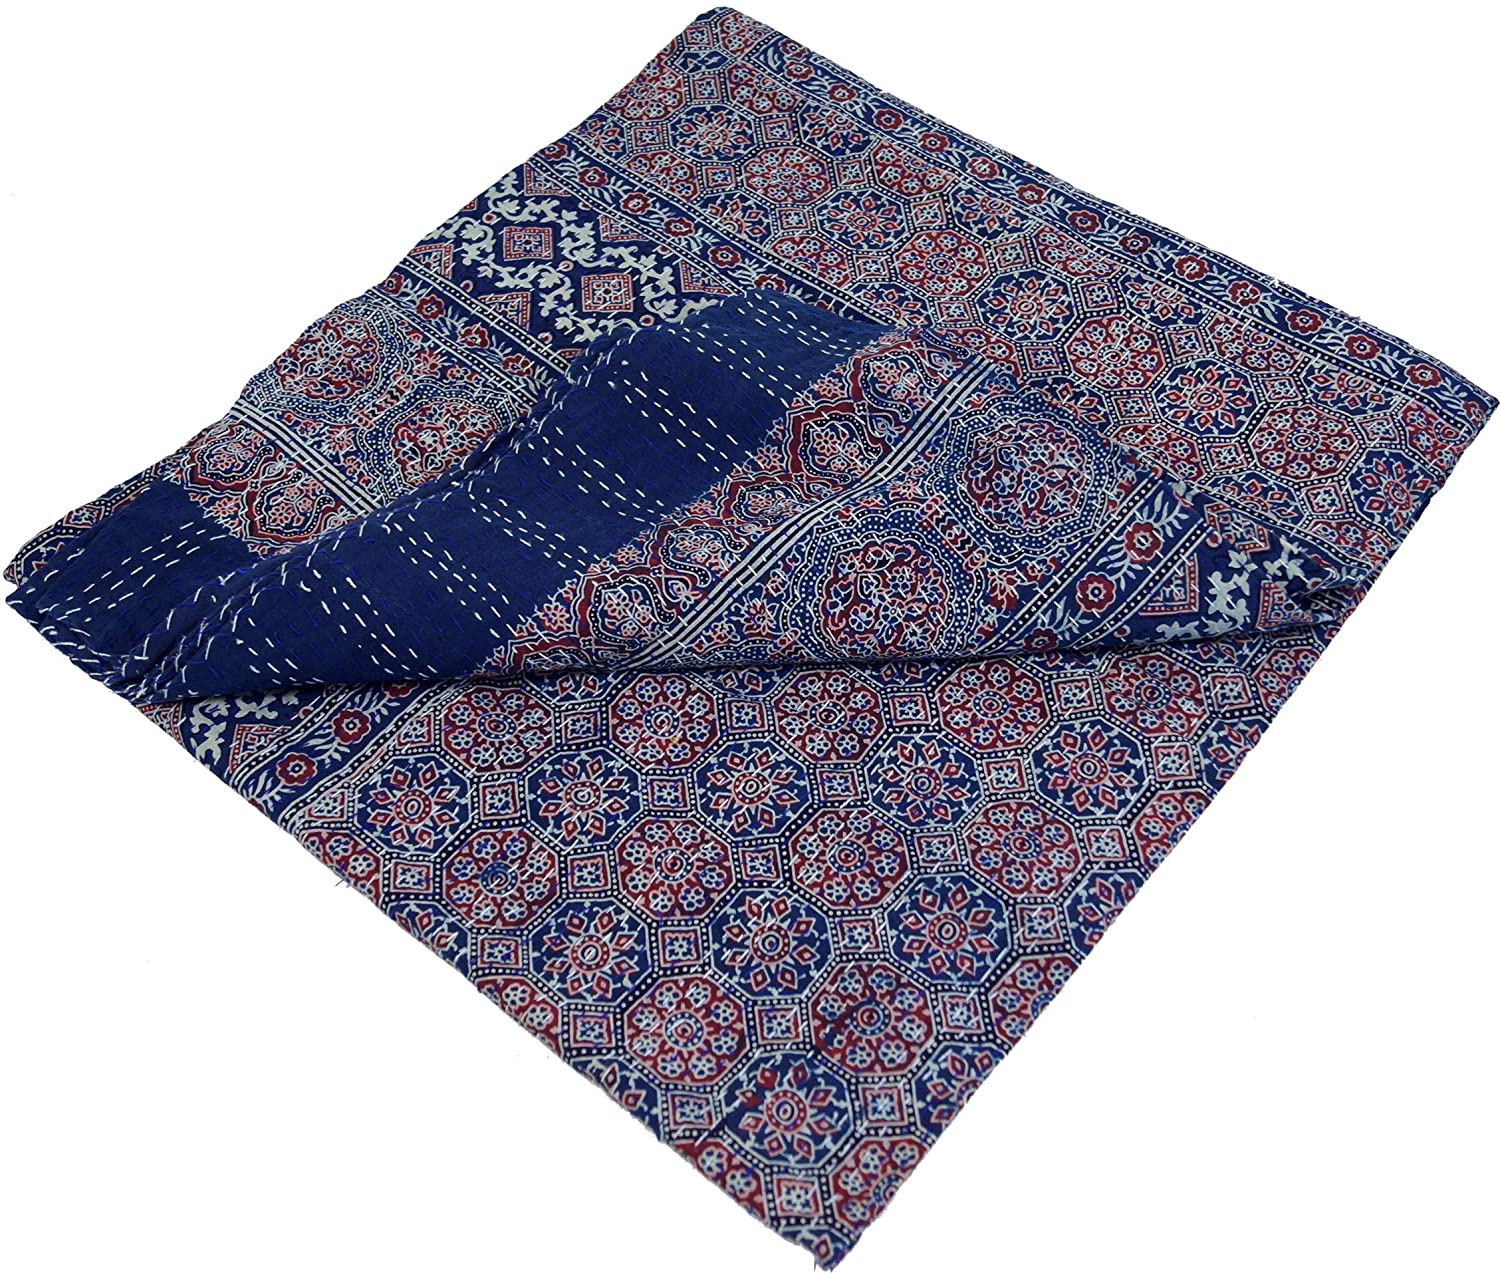 Guru-Shop, Quilt, Bedspread, Bedspread, Bed Throw, Embroidered Cloth, India